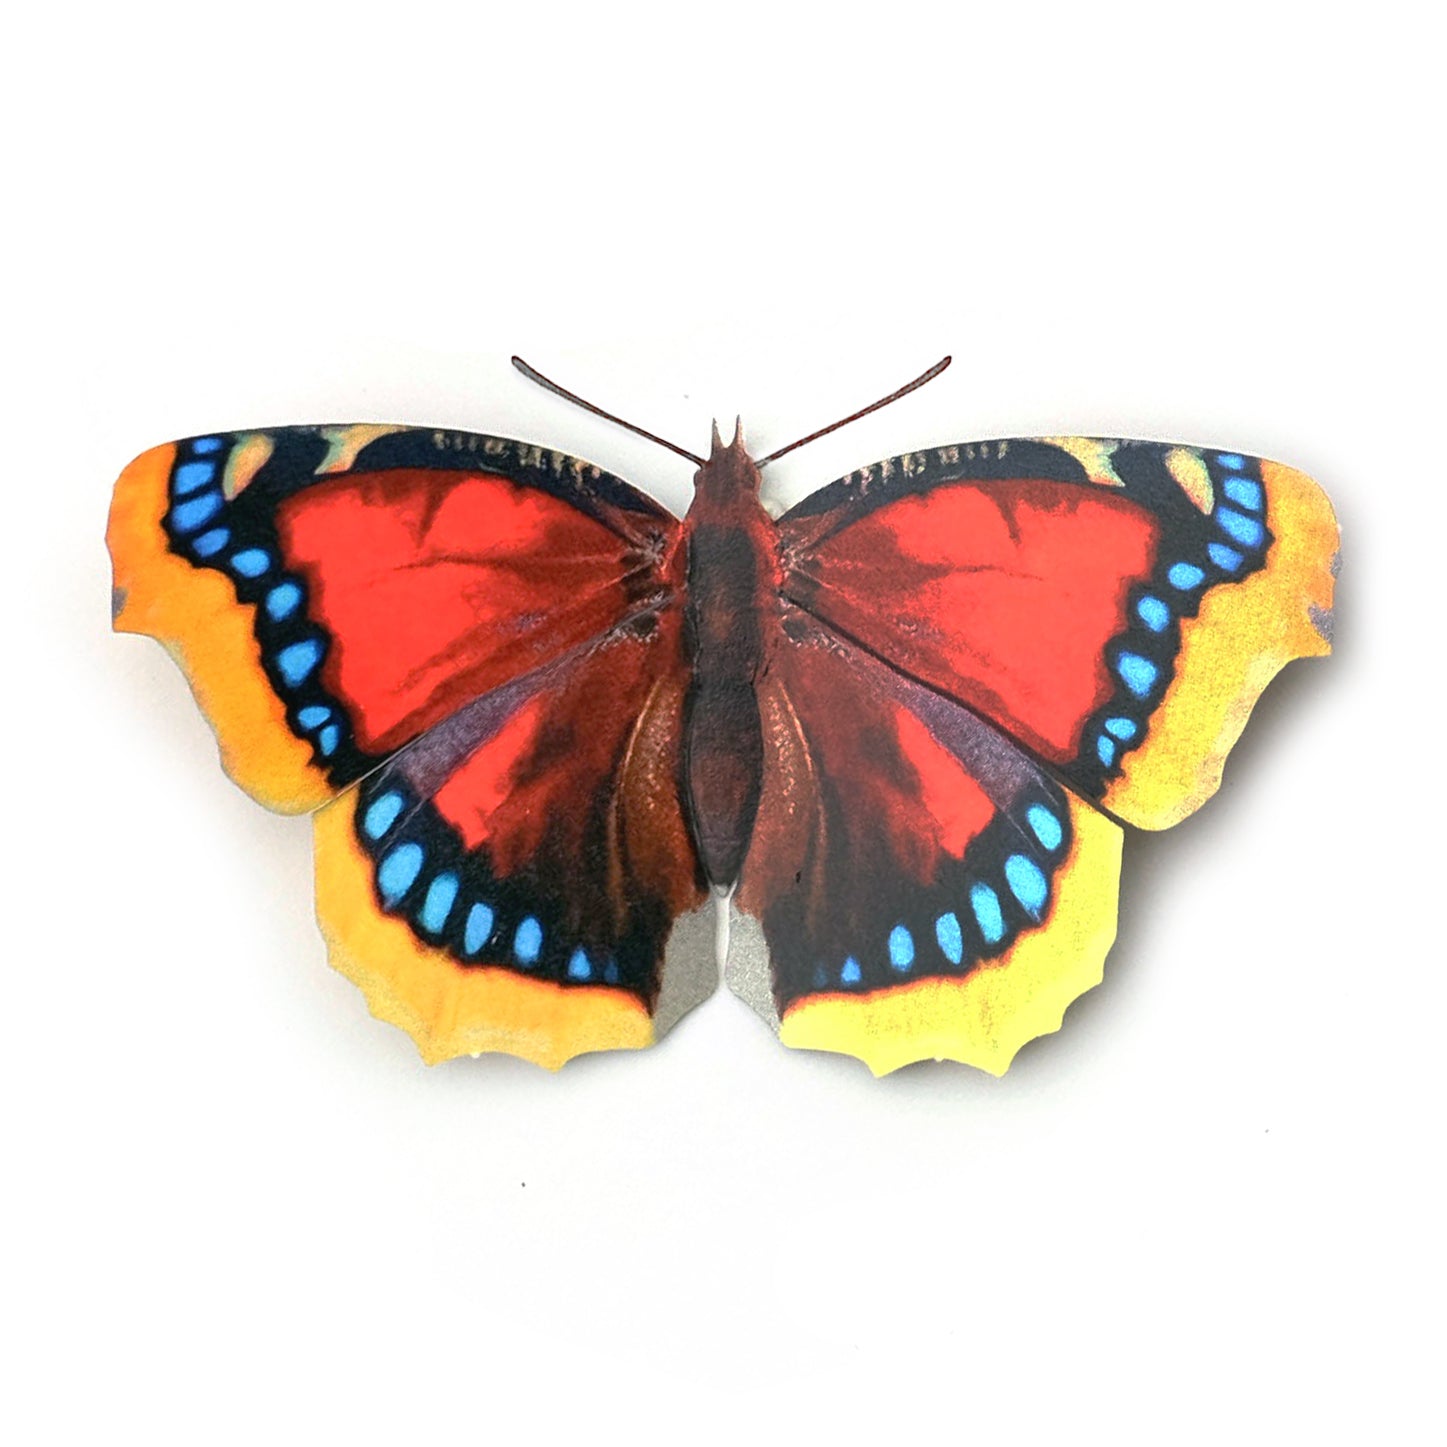 'Scarlet Mourning-Cloak' Butterfly